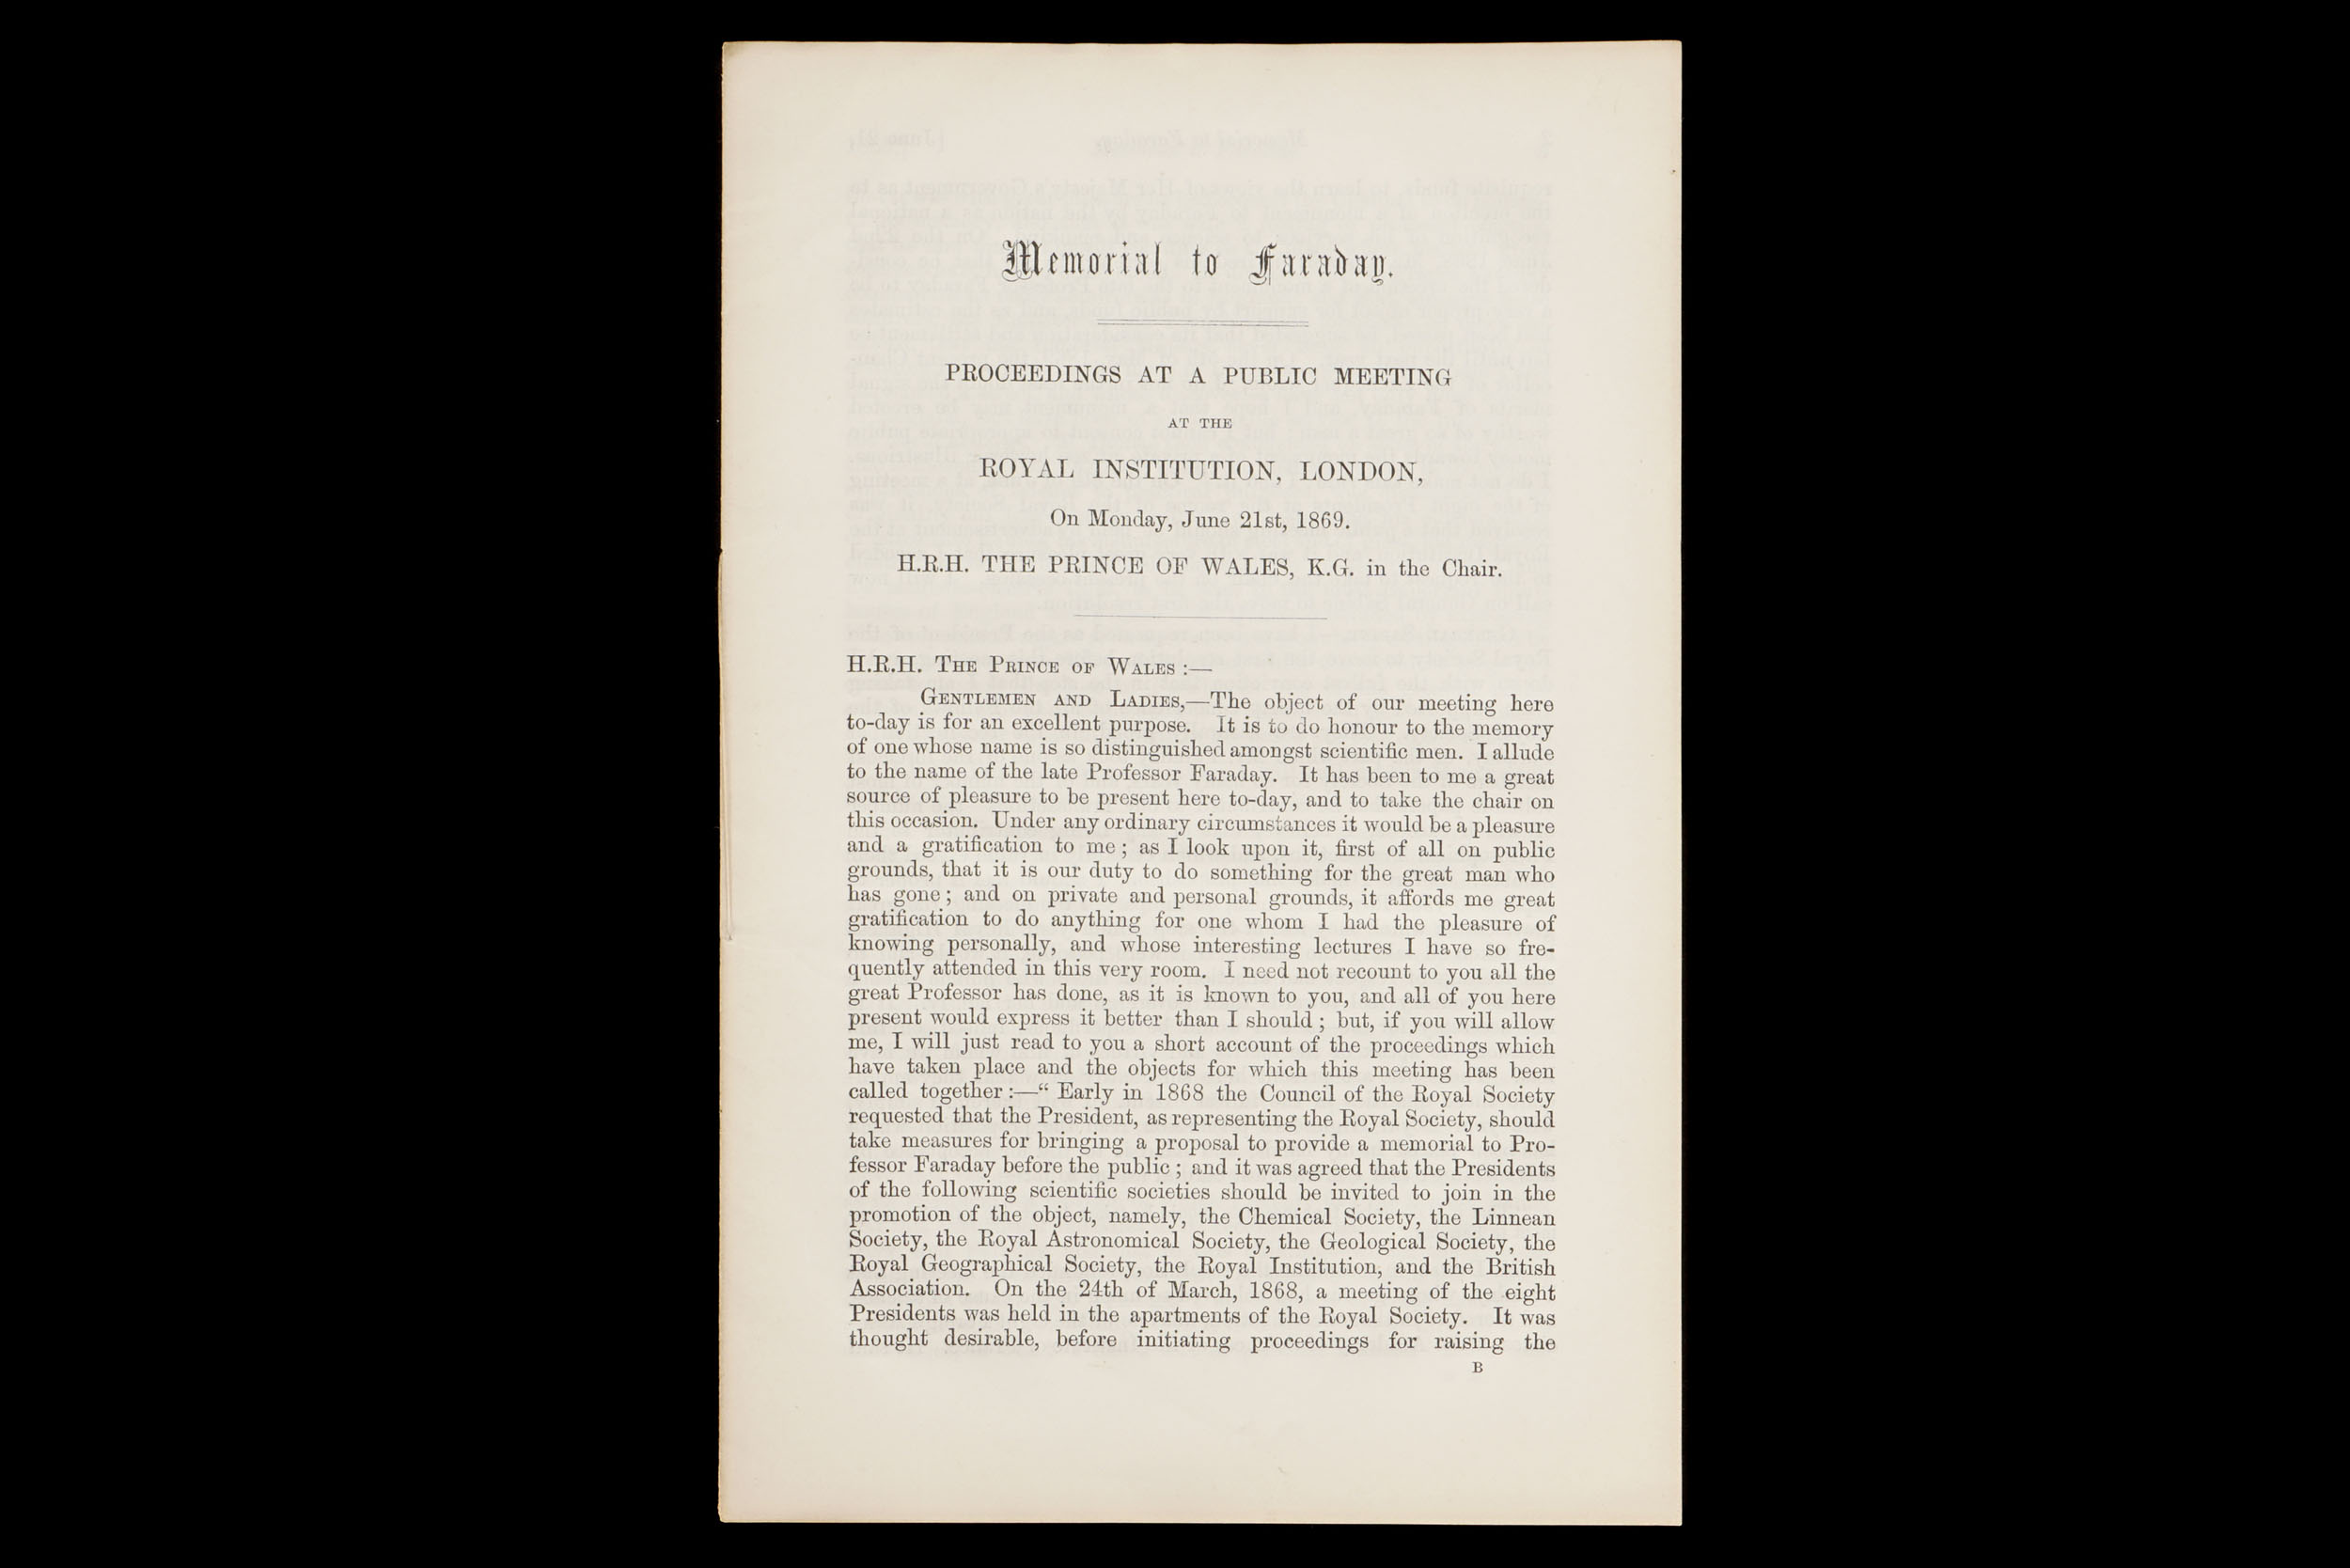 A Memorial Booklet to Faraday,